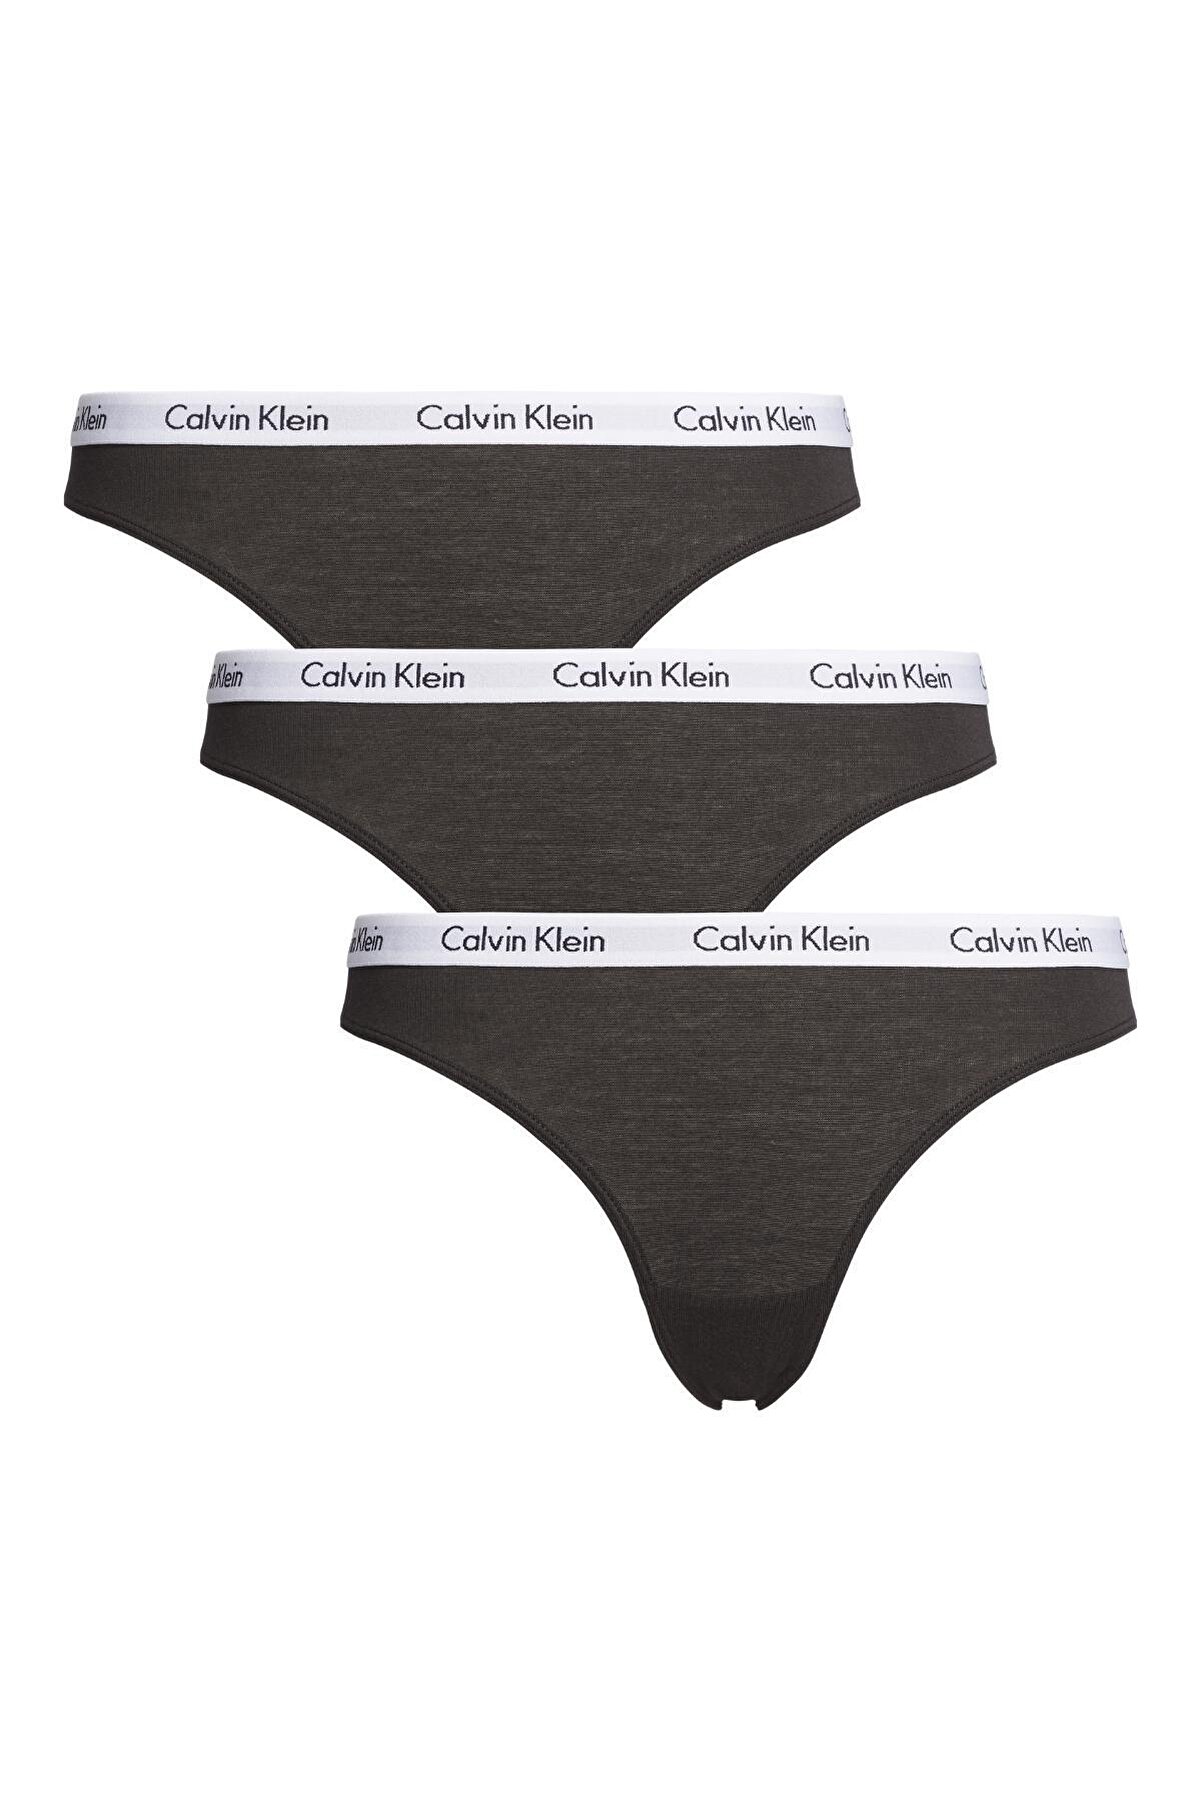 Calvin Klein Kadın Imzalı Elastik Bantlı Siyah Külot 000qd3588e001-siyah